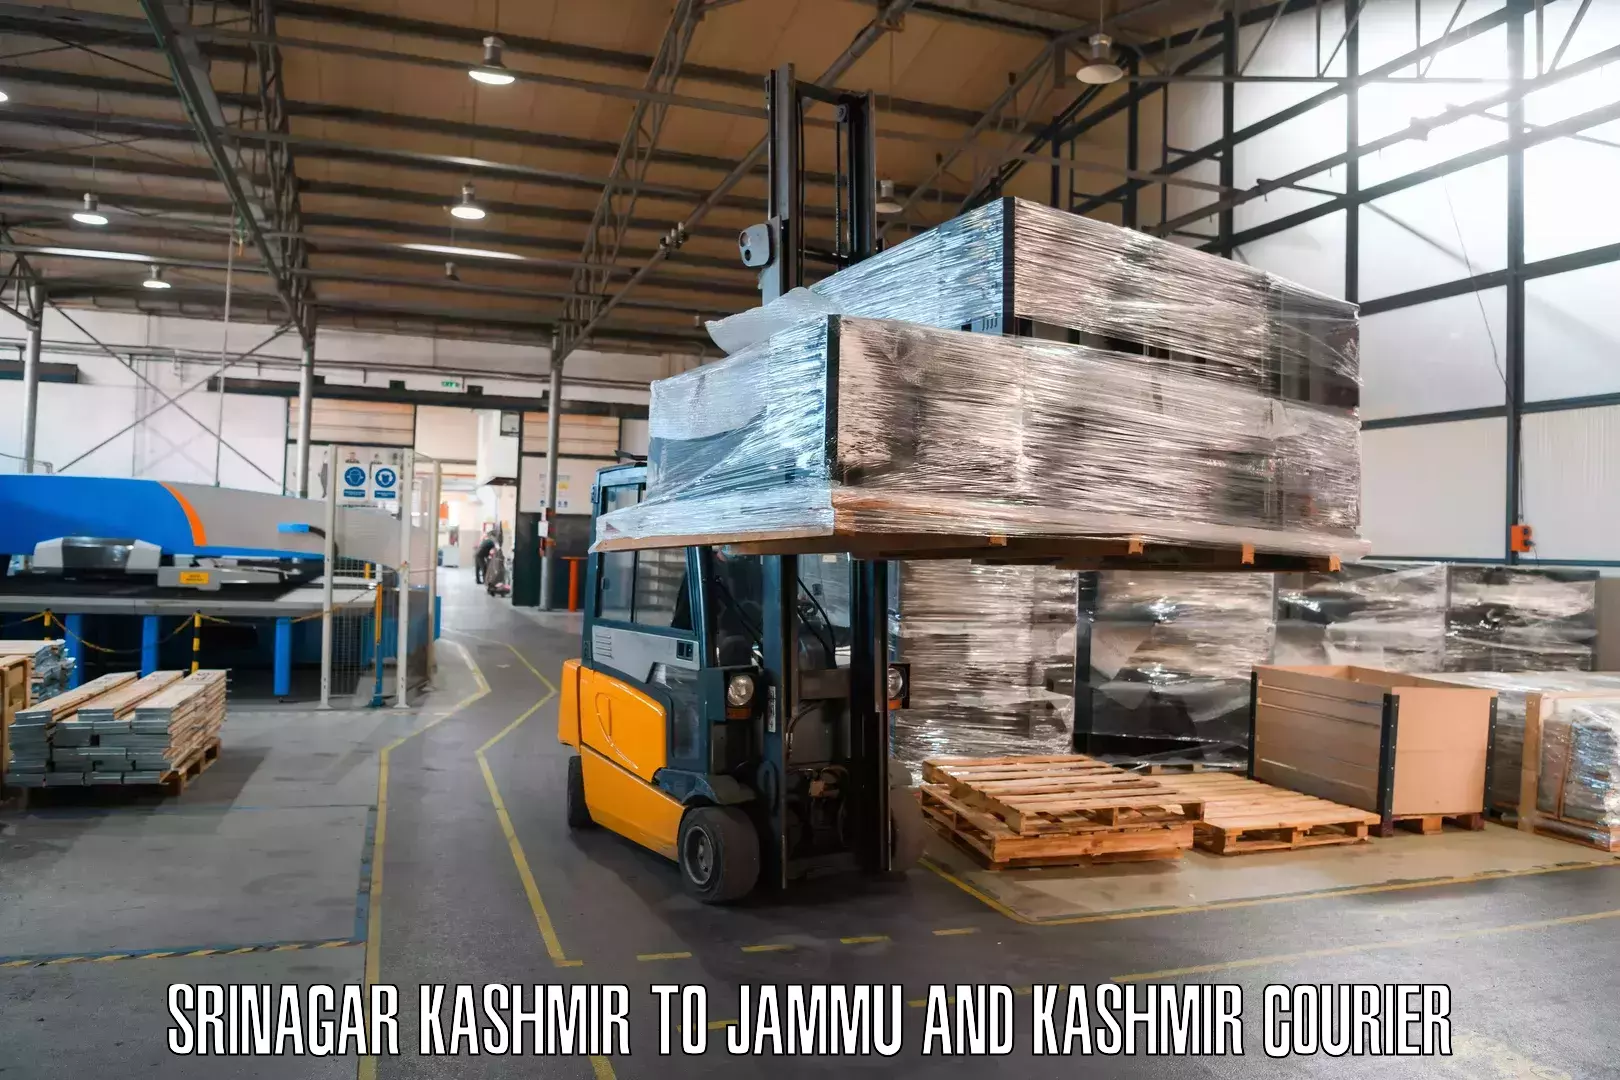 Multi-national courier services Srinagar Kashmir to Jammu and Kashmir